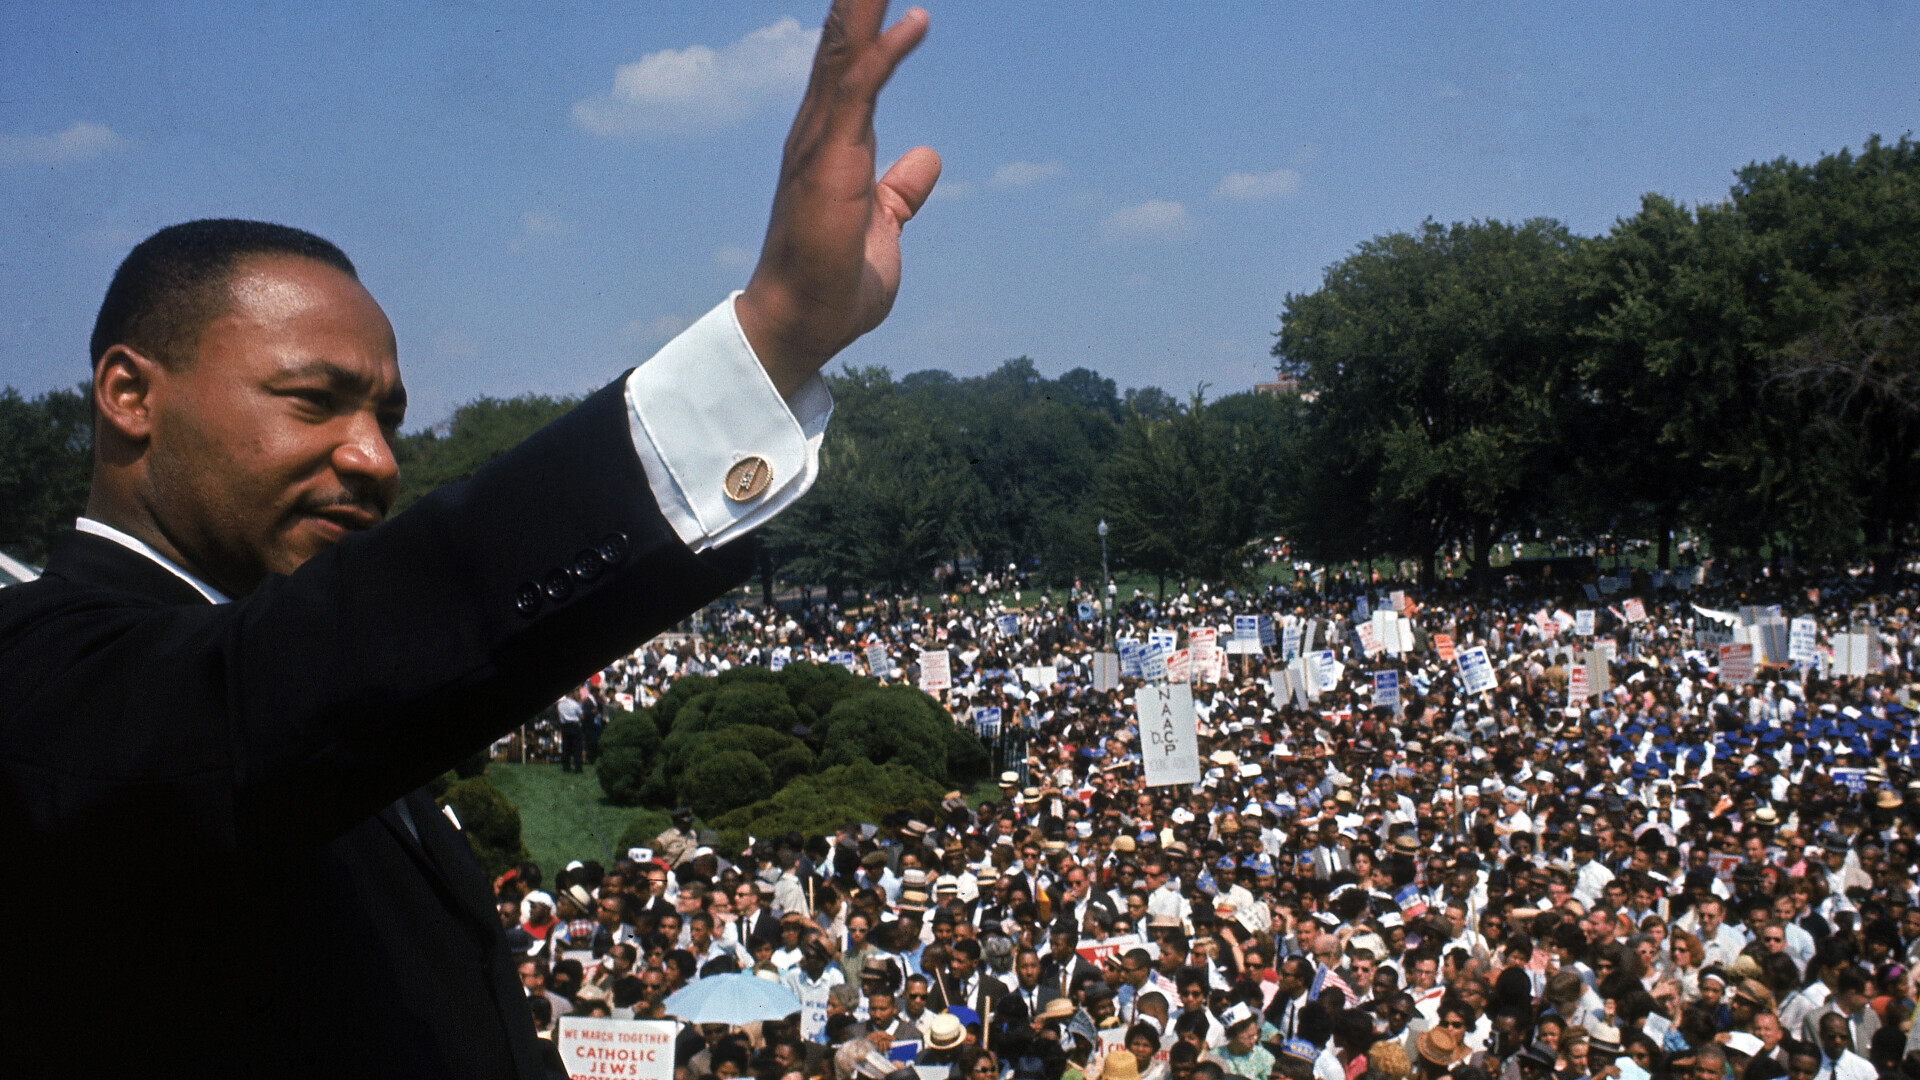 Activistul și predicatorul Martin Luther King Jr., comemorat la 50 de ani de la asasinare